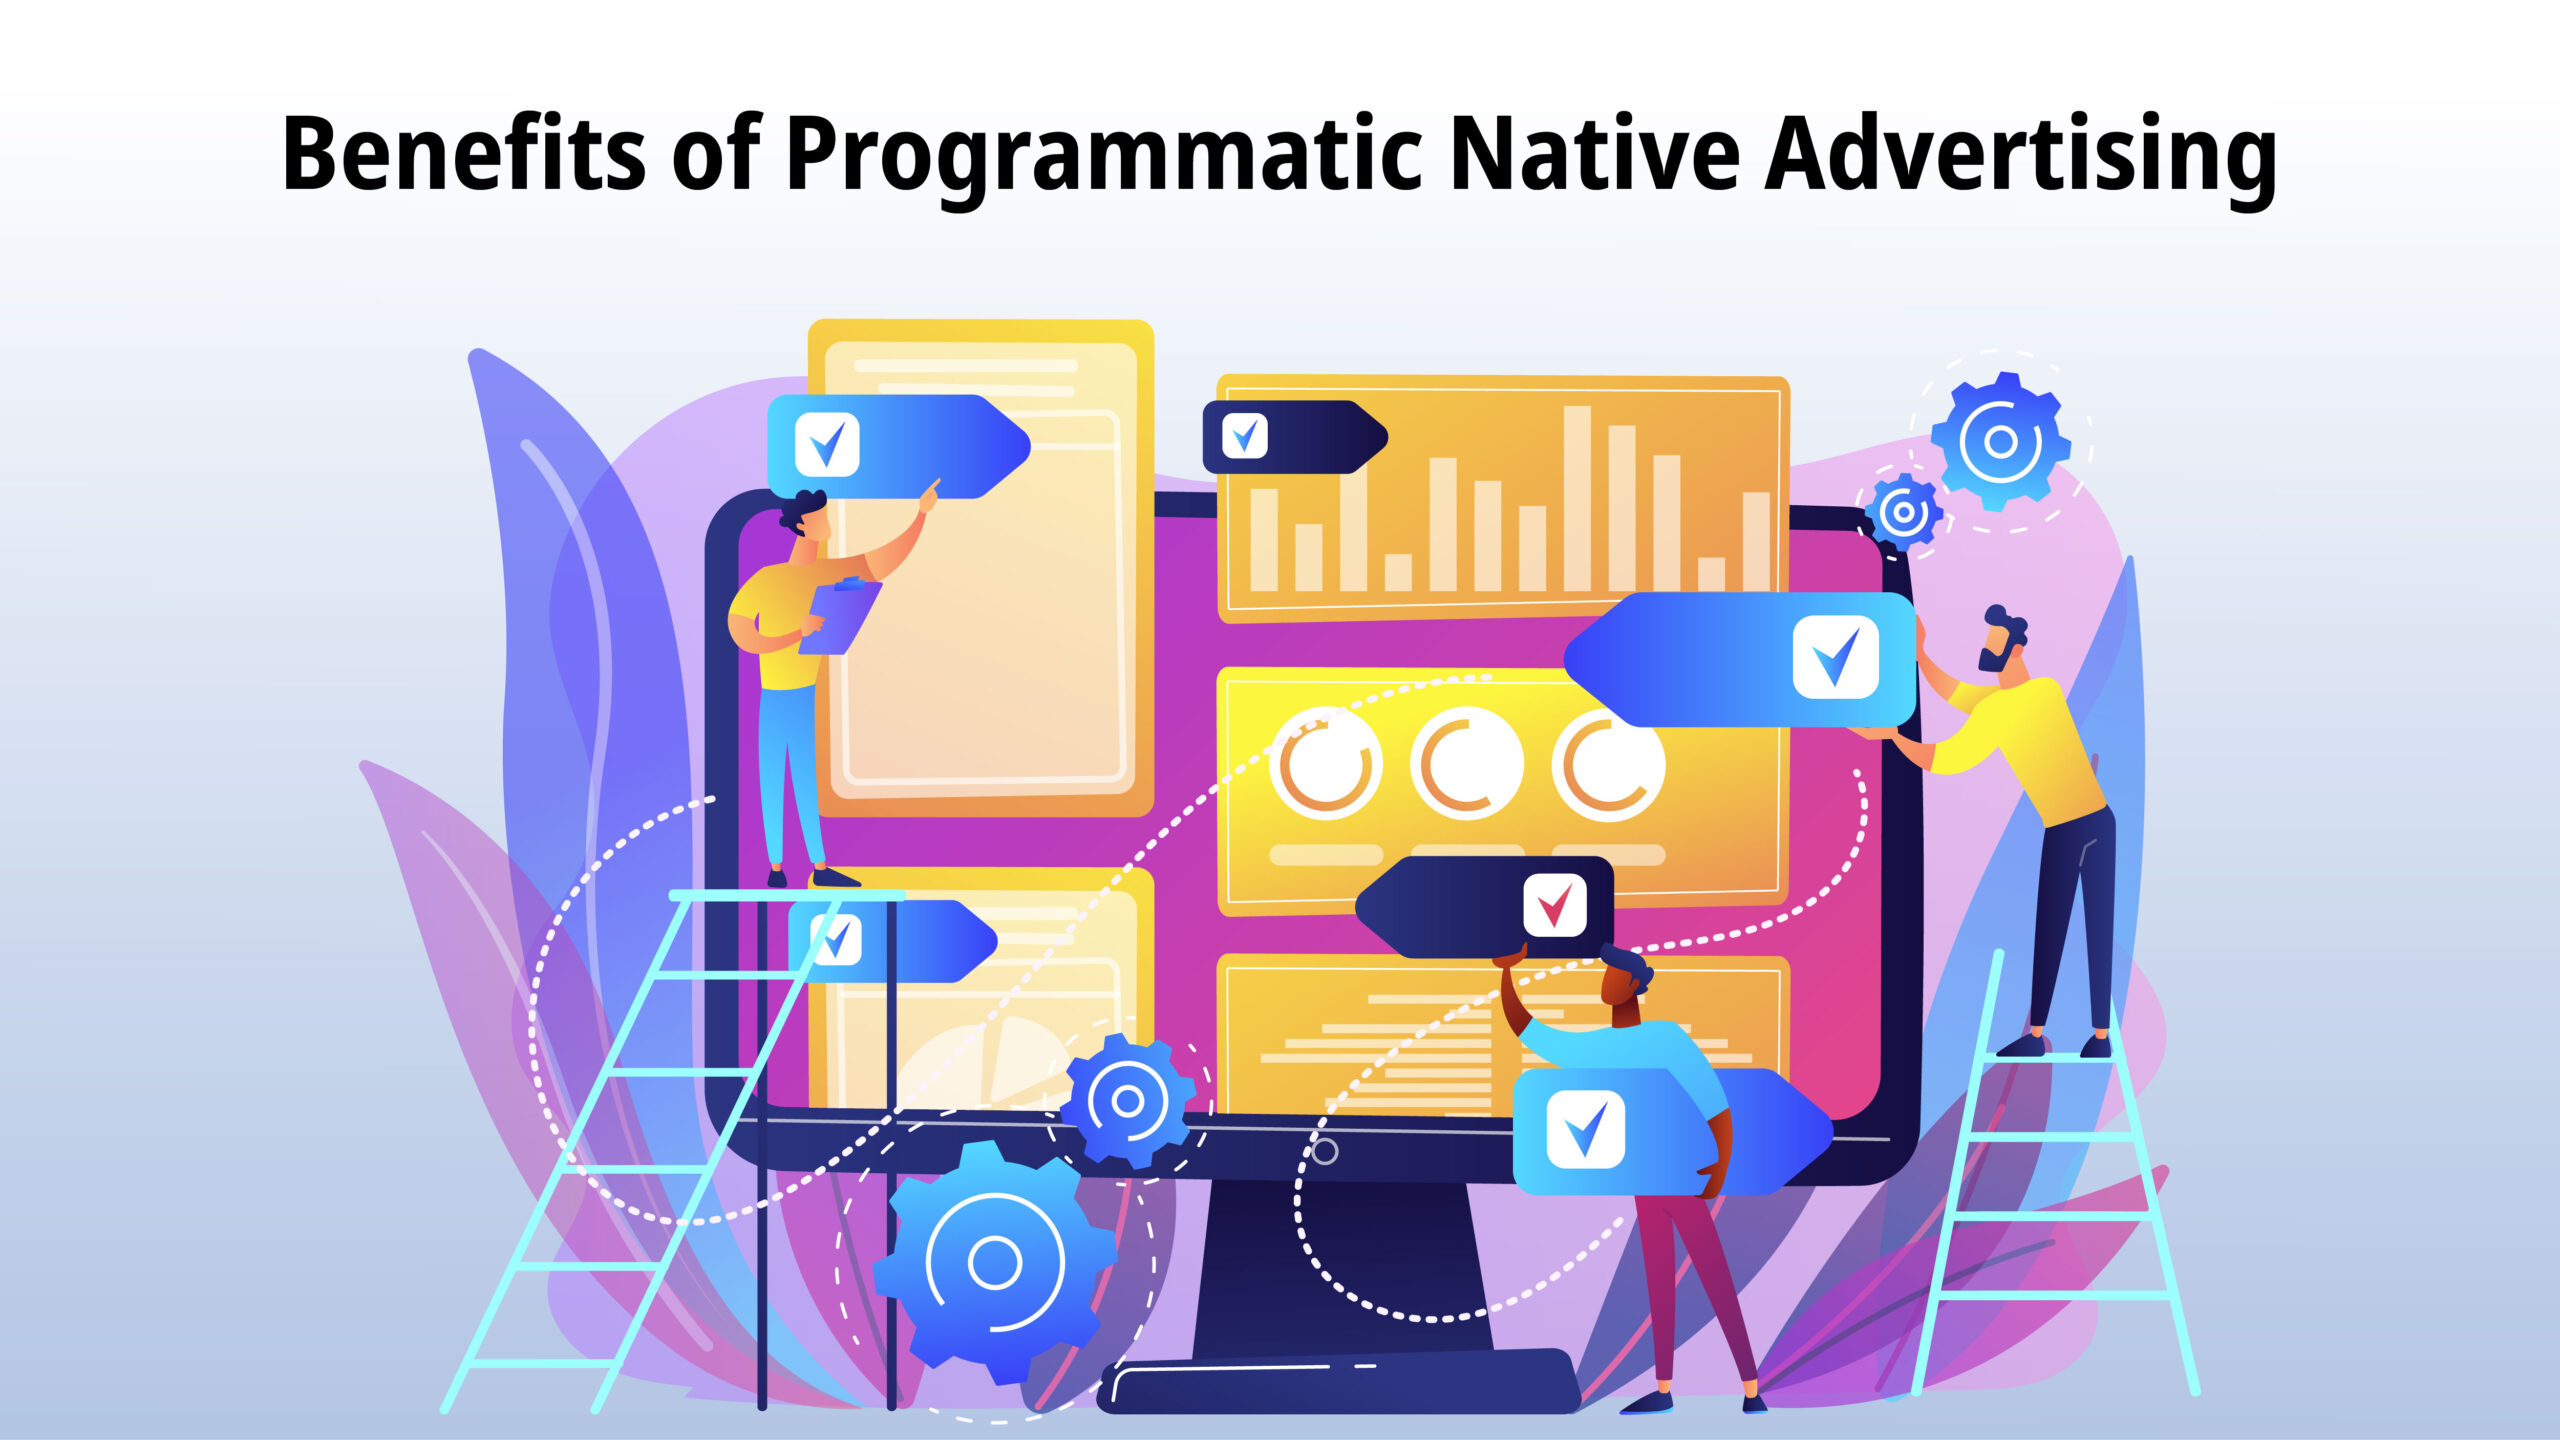 Programmatic Native Advertising